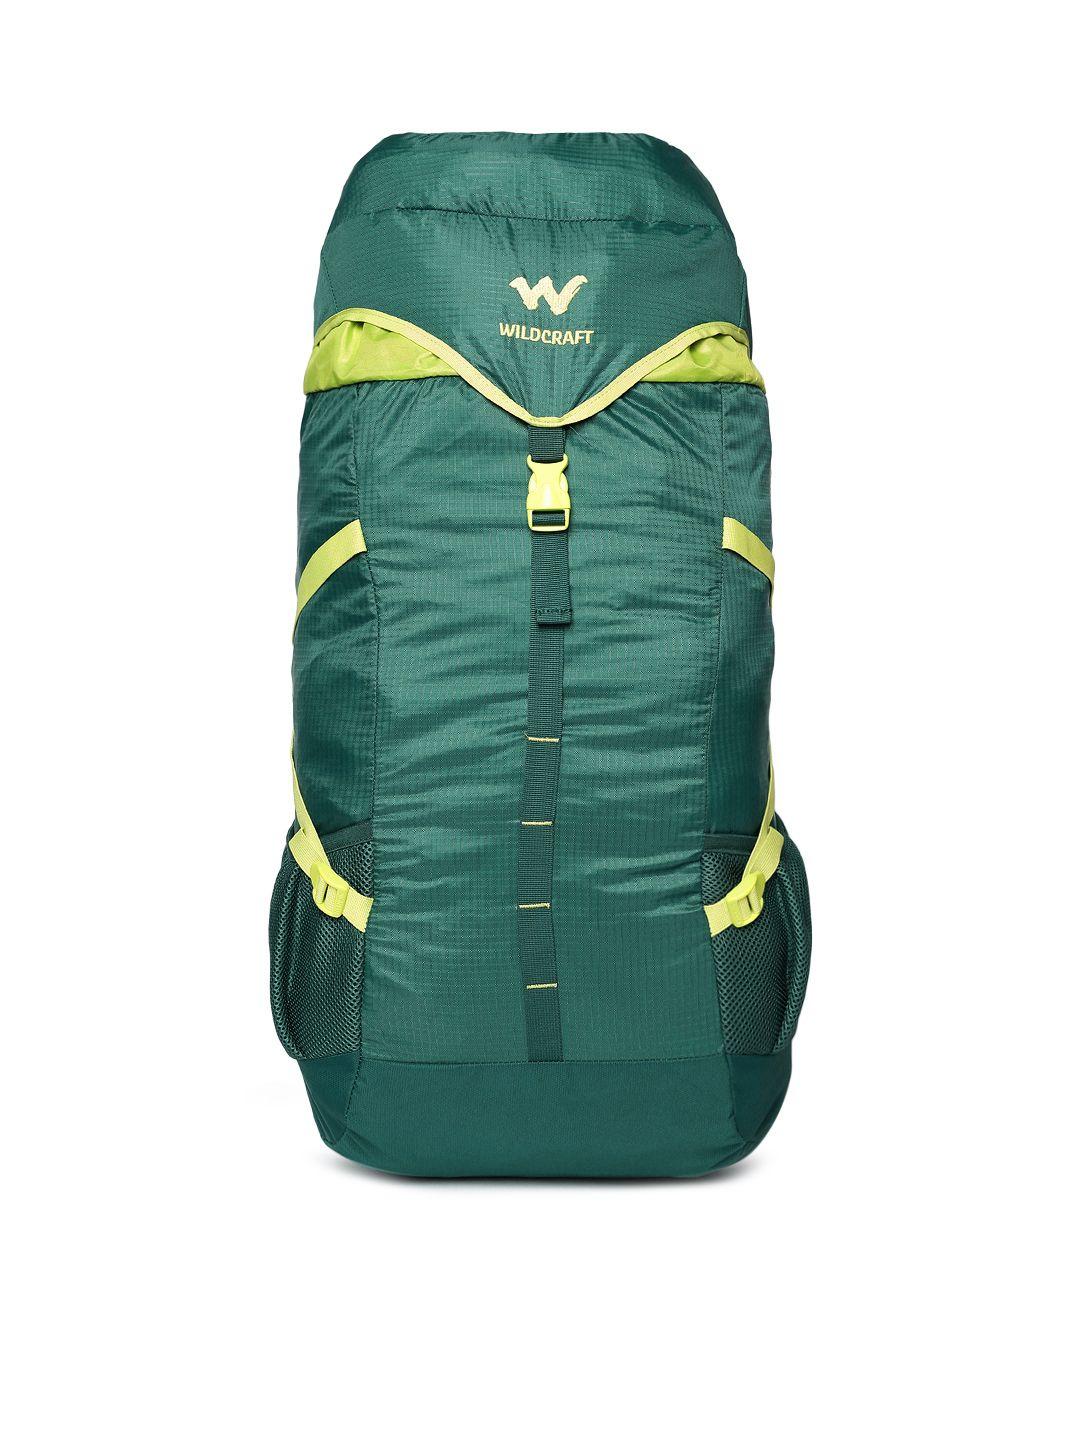 wildcraft unisex teal green solid flip ruck 1 rucksack